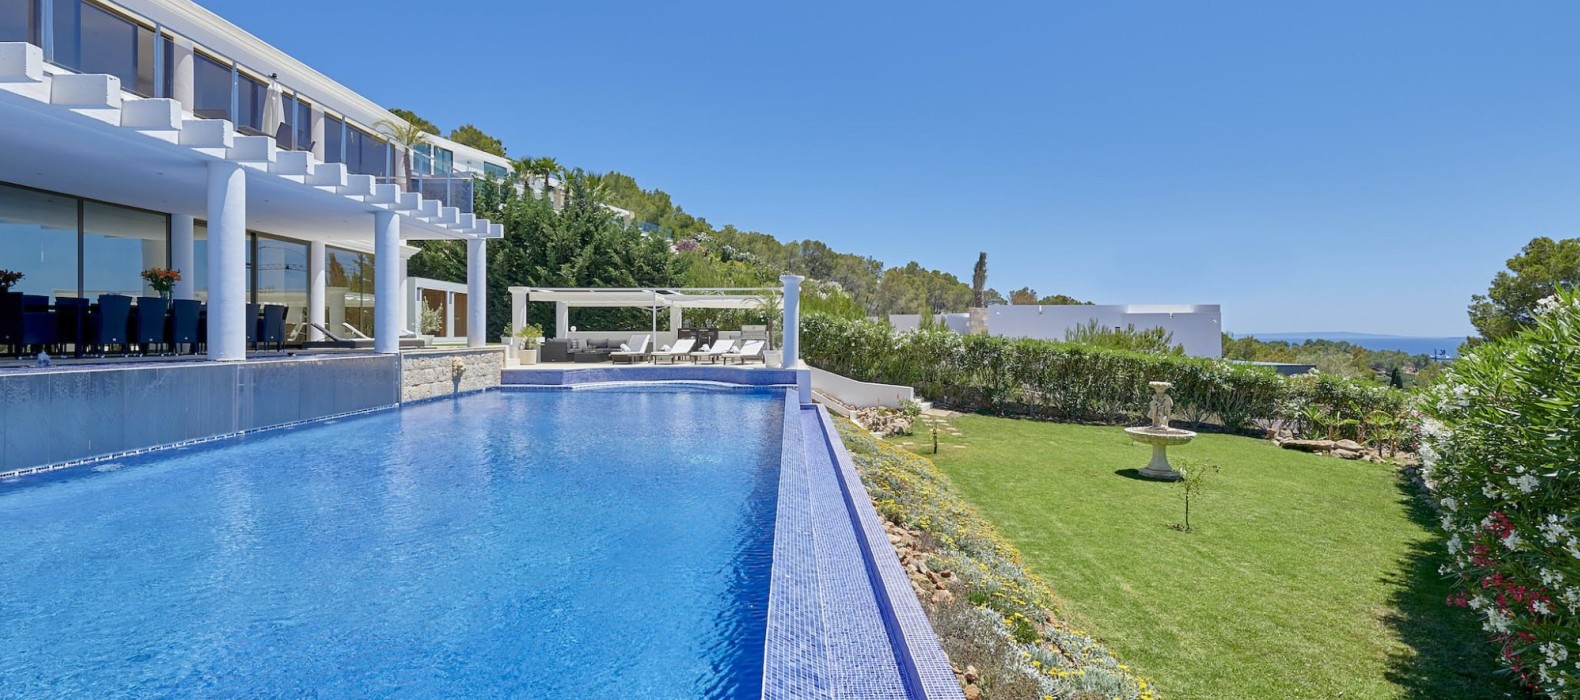 Exterior pool view of Villa White Light in Ibiza